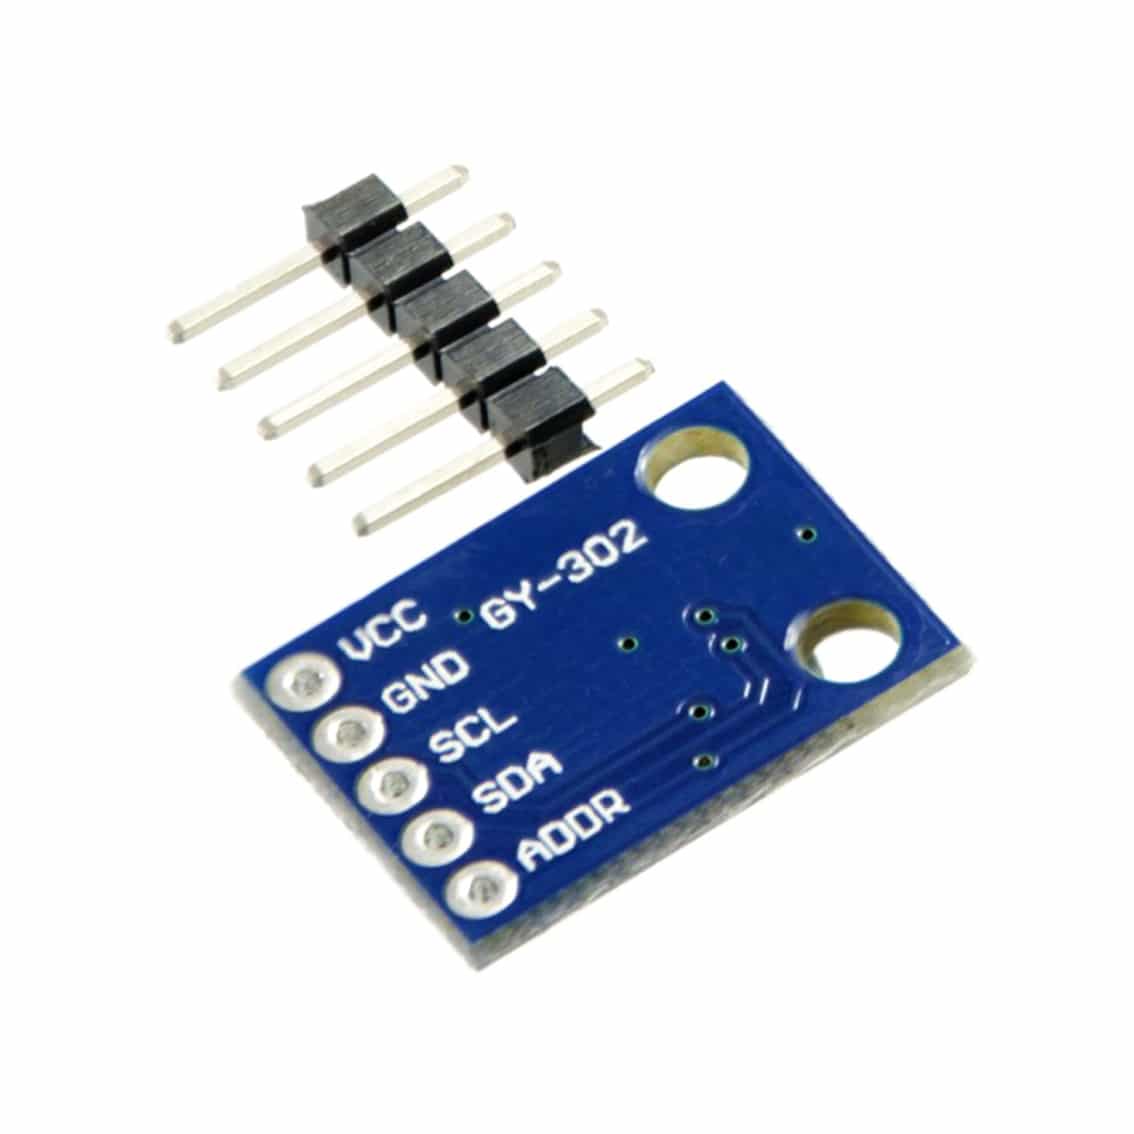 BH1750FVI Digital Light Intensity Sensor Module – GY-302 2